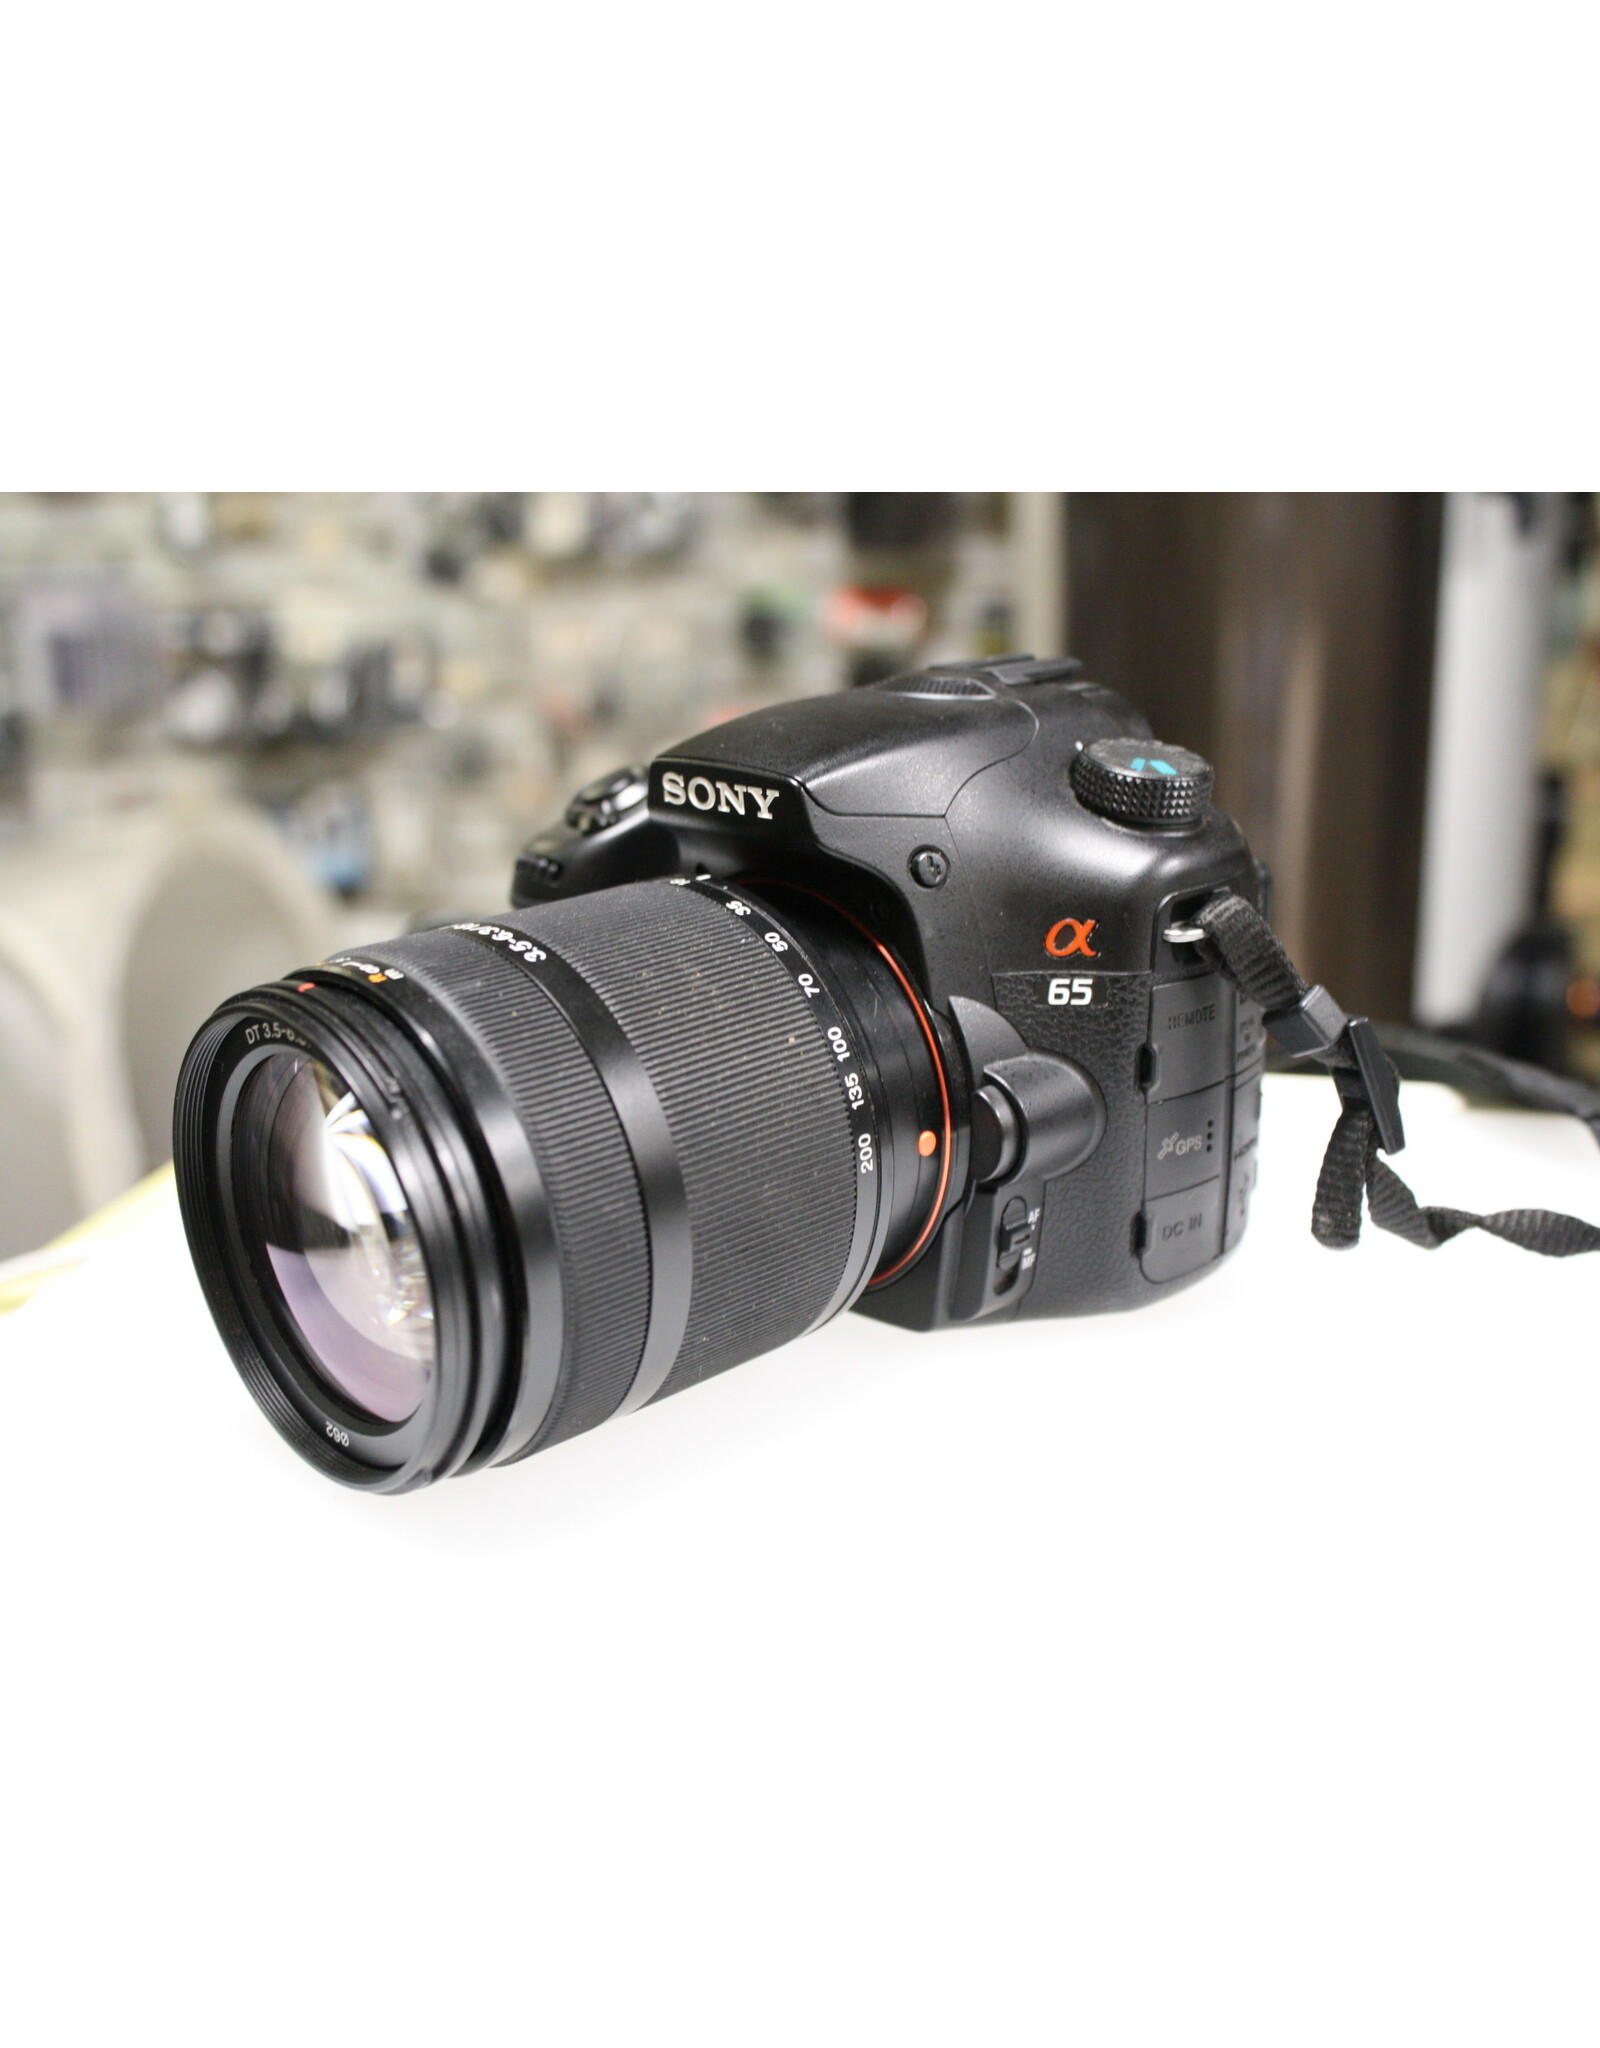 Sony Alpha SLT-A65 24.3MP Digital SLR Camera w/ 18-200mm f/3.5-6.3 Lens,  Charger, (Pre-Owned)